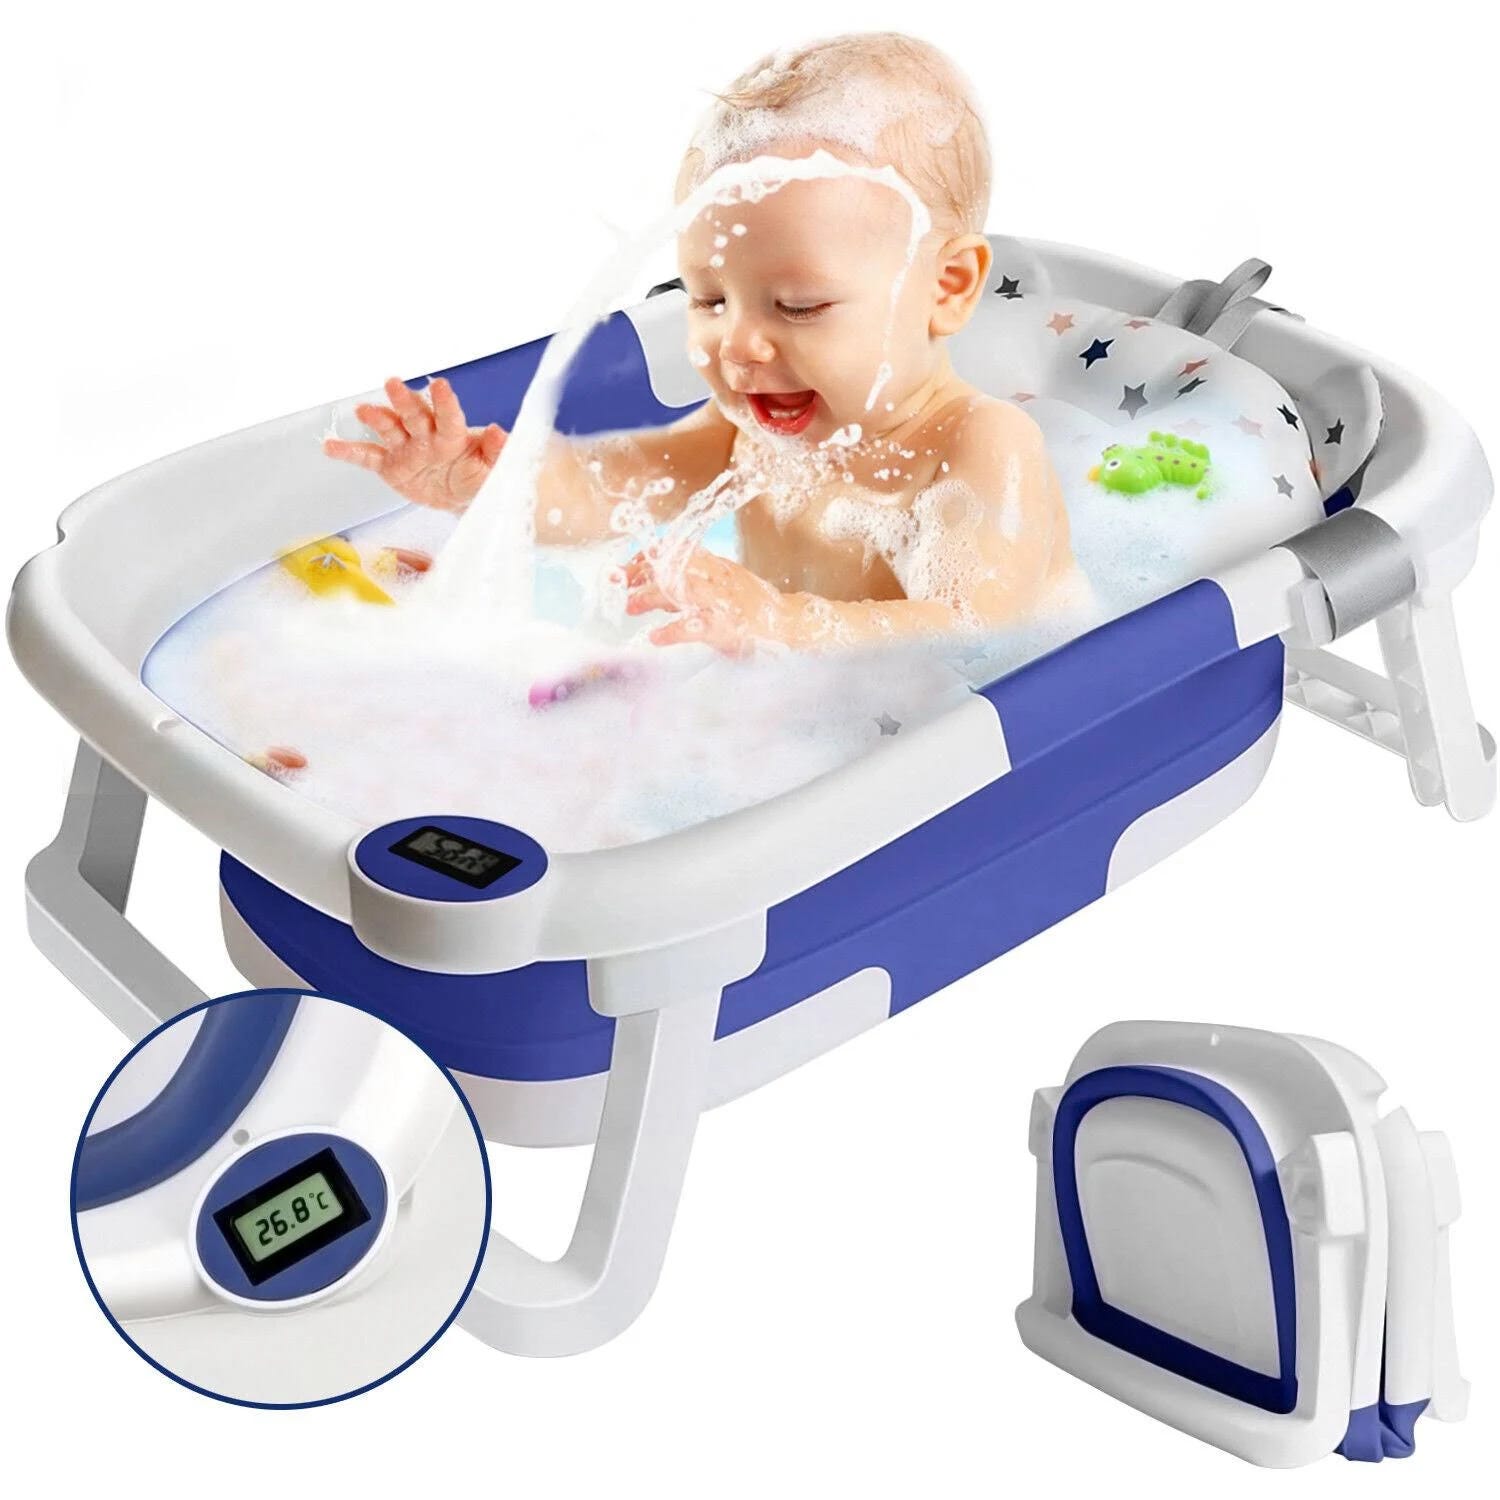 Travel-Friendly Adov Baby Bathtub for Infants | Image